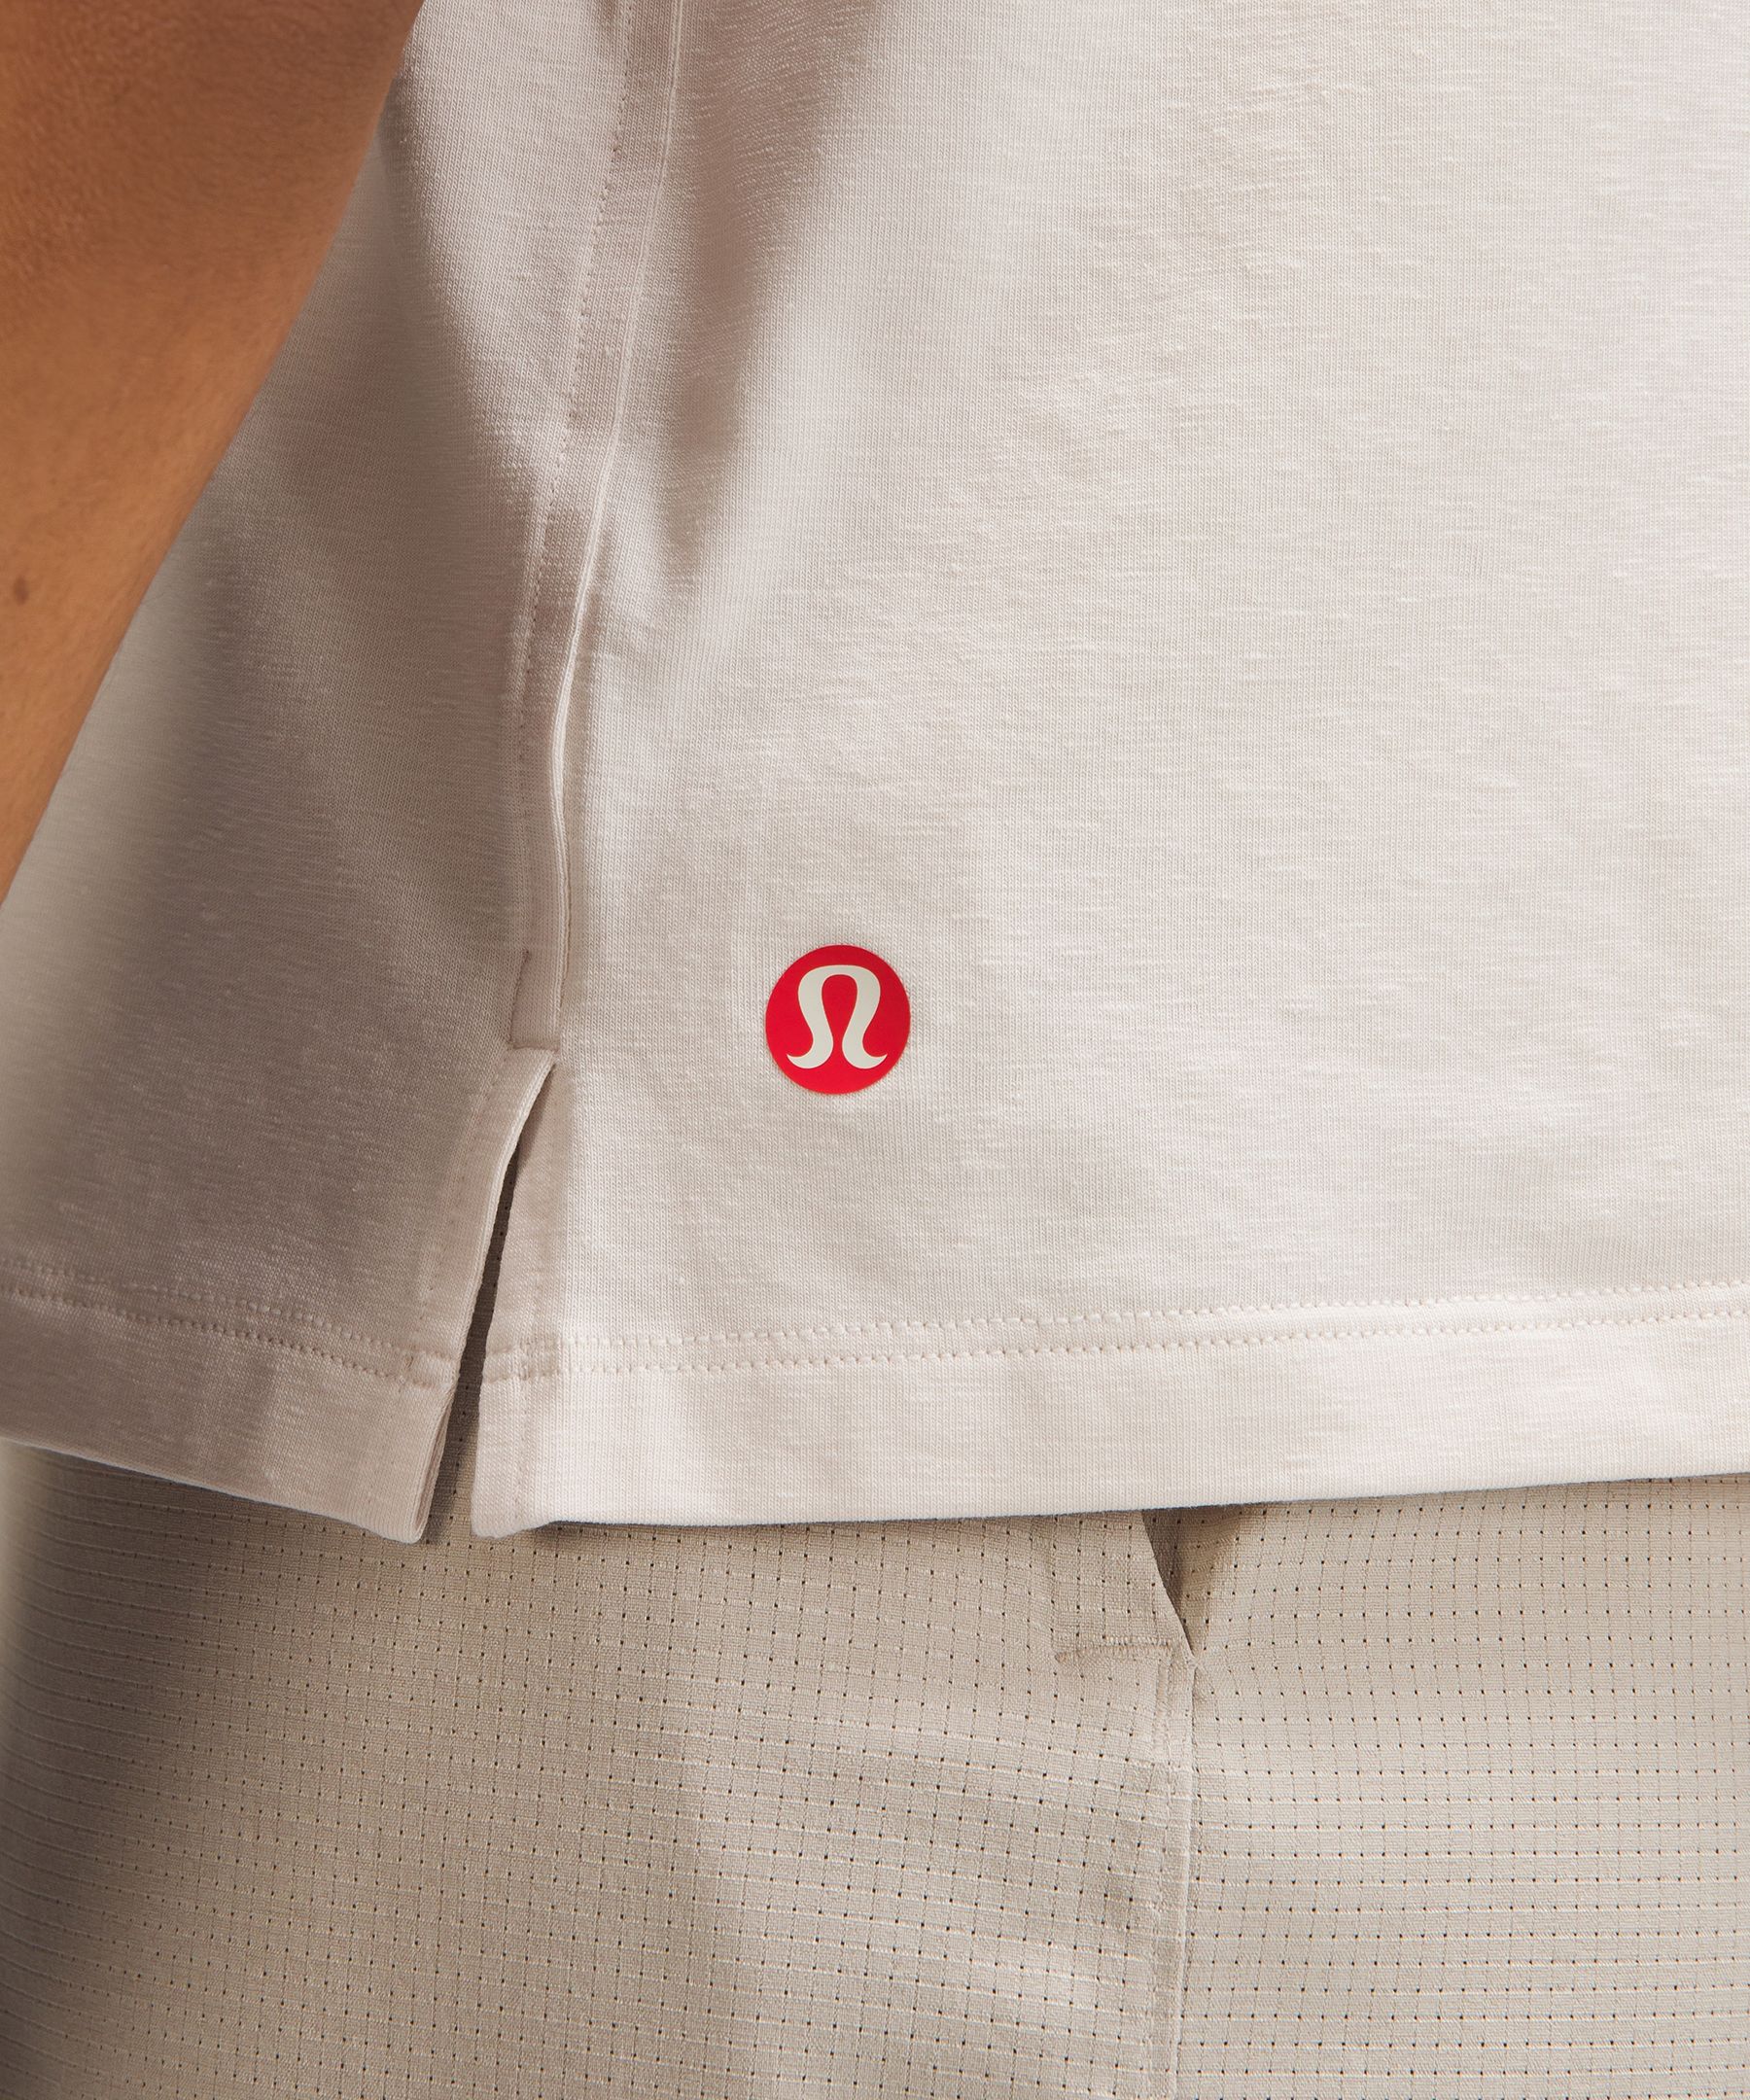 Team Canada Classic-Fit Cotton-Blend T-Shirt *CPC Logo | Women's Short Sleeve Shirts & Tee's